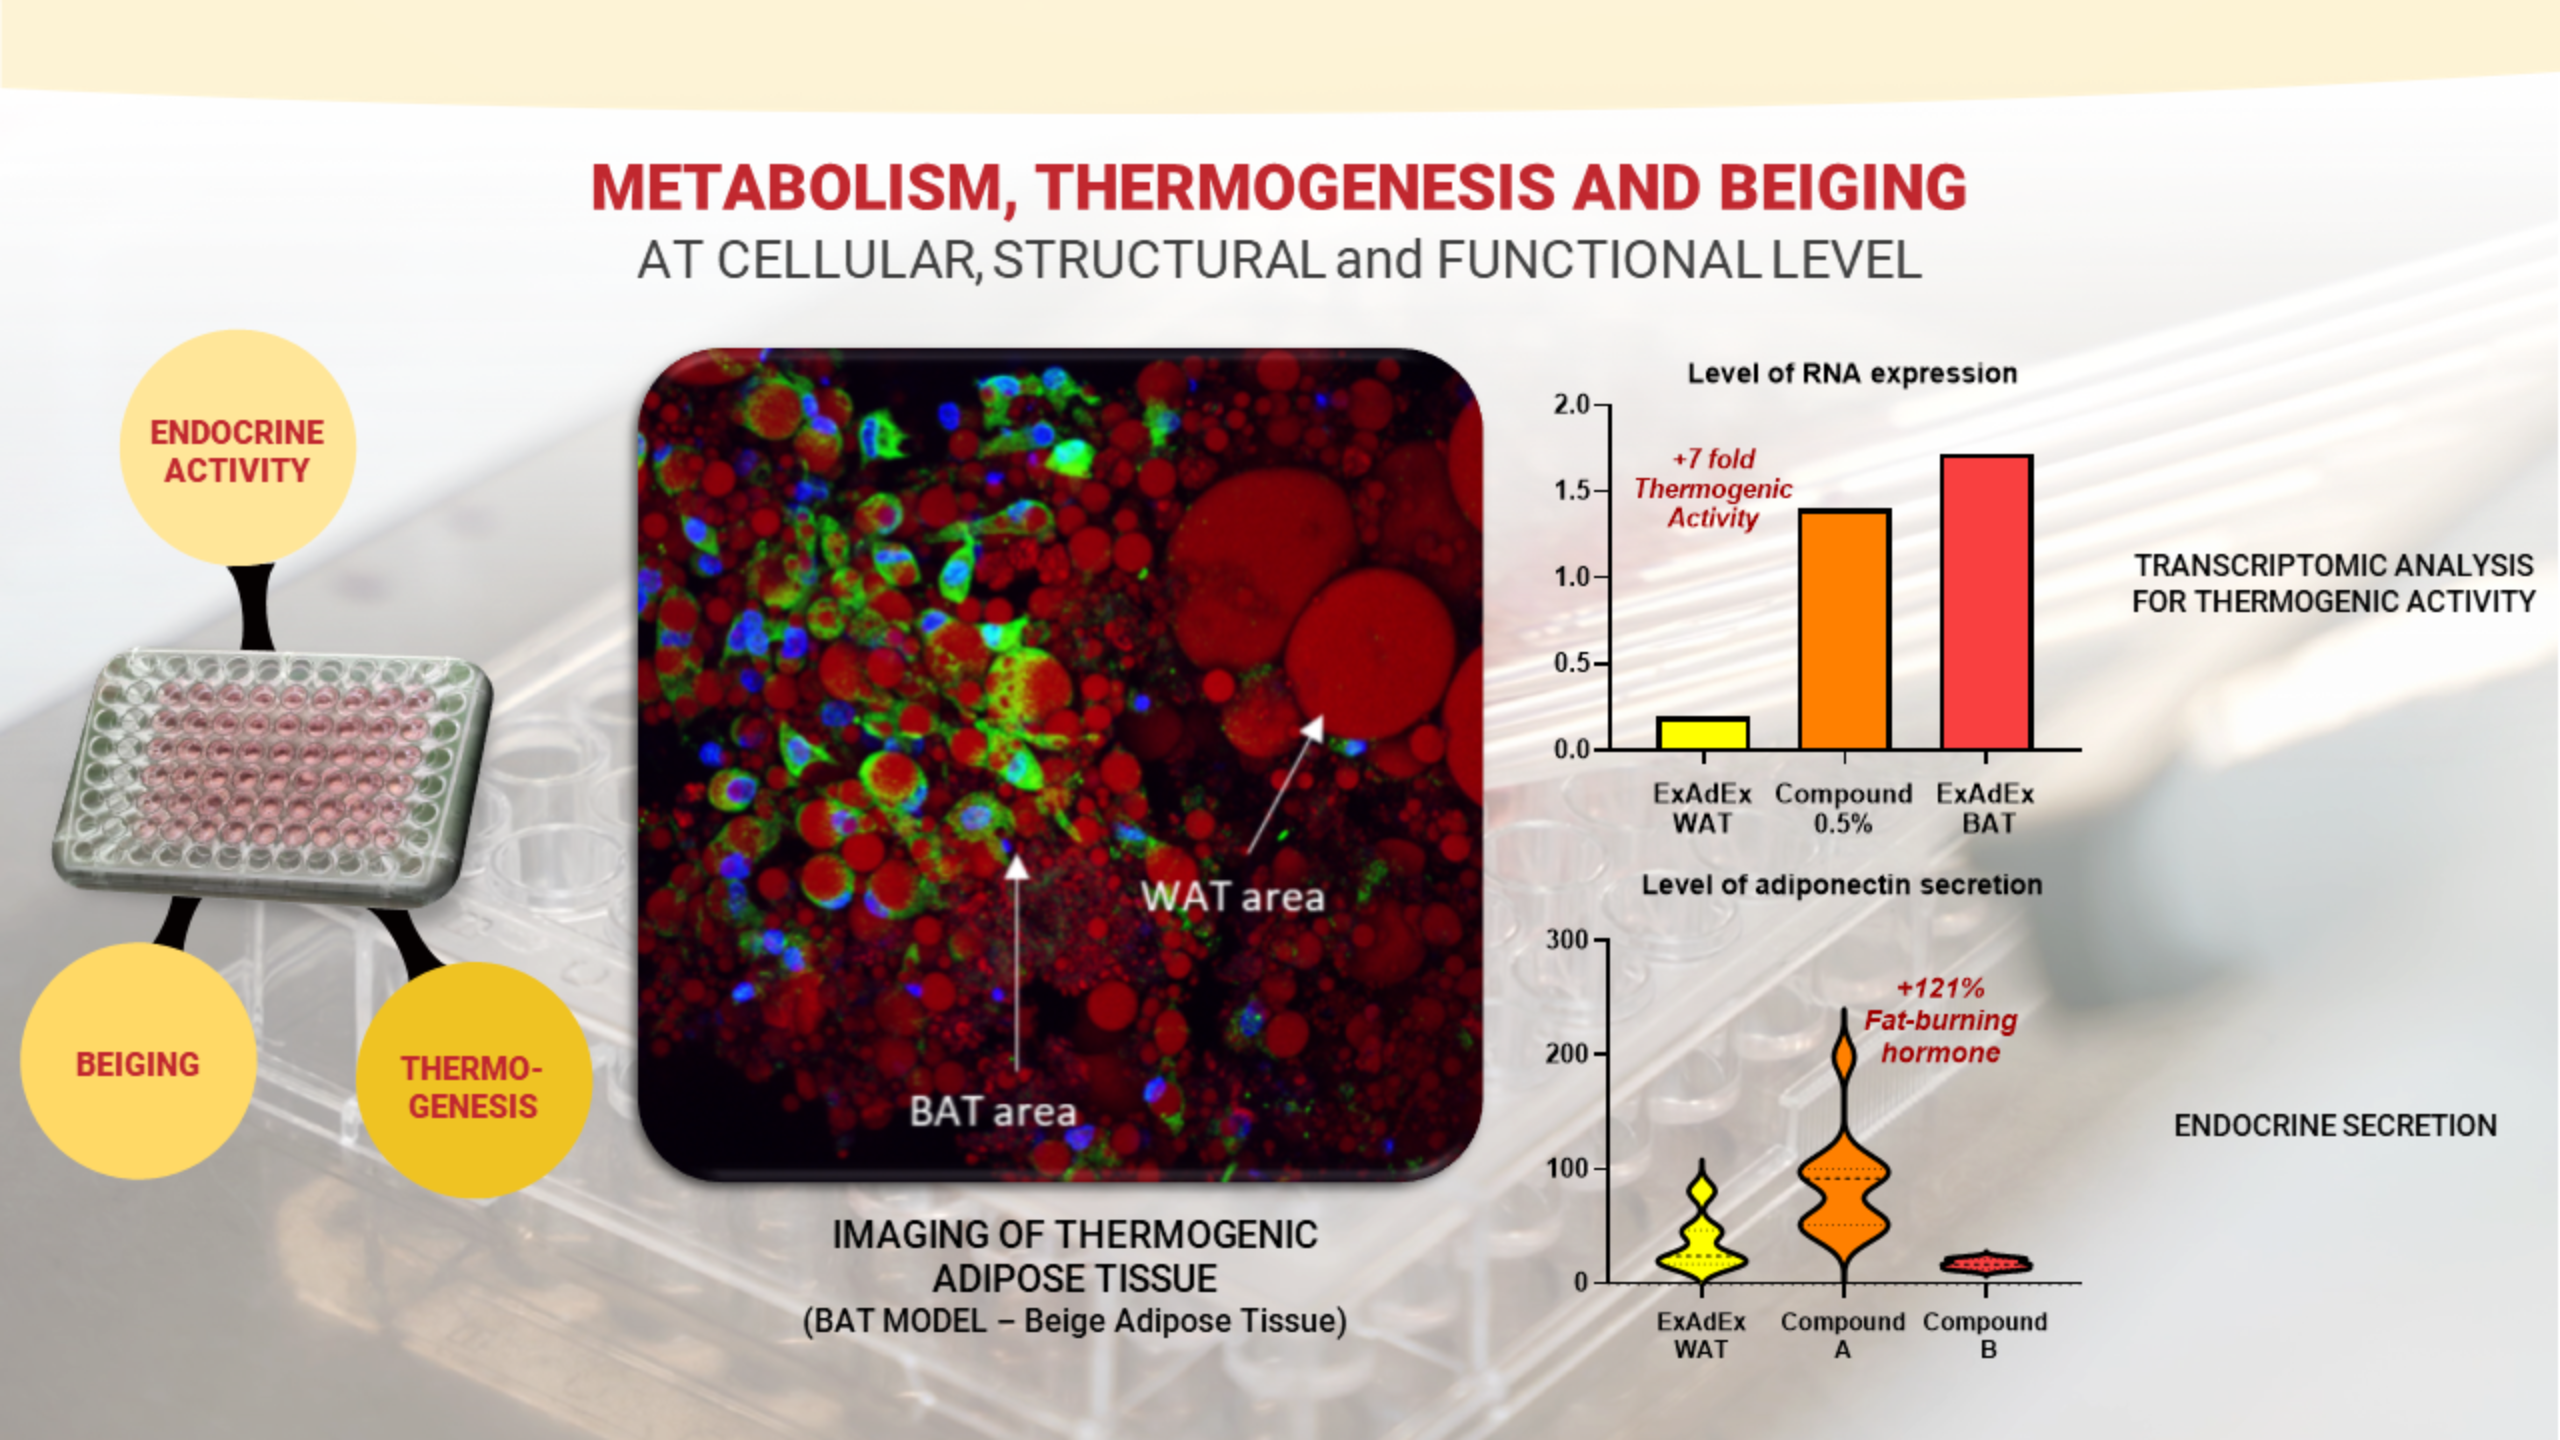 metabolism, thermogenesis and beiging- exadex